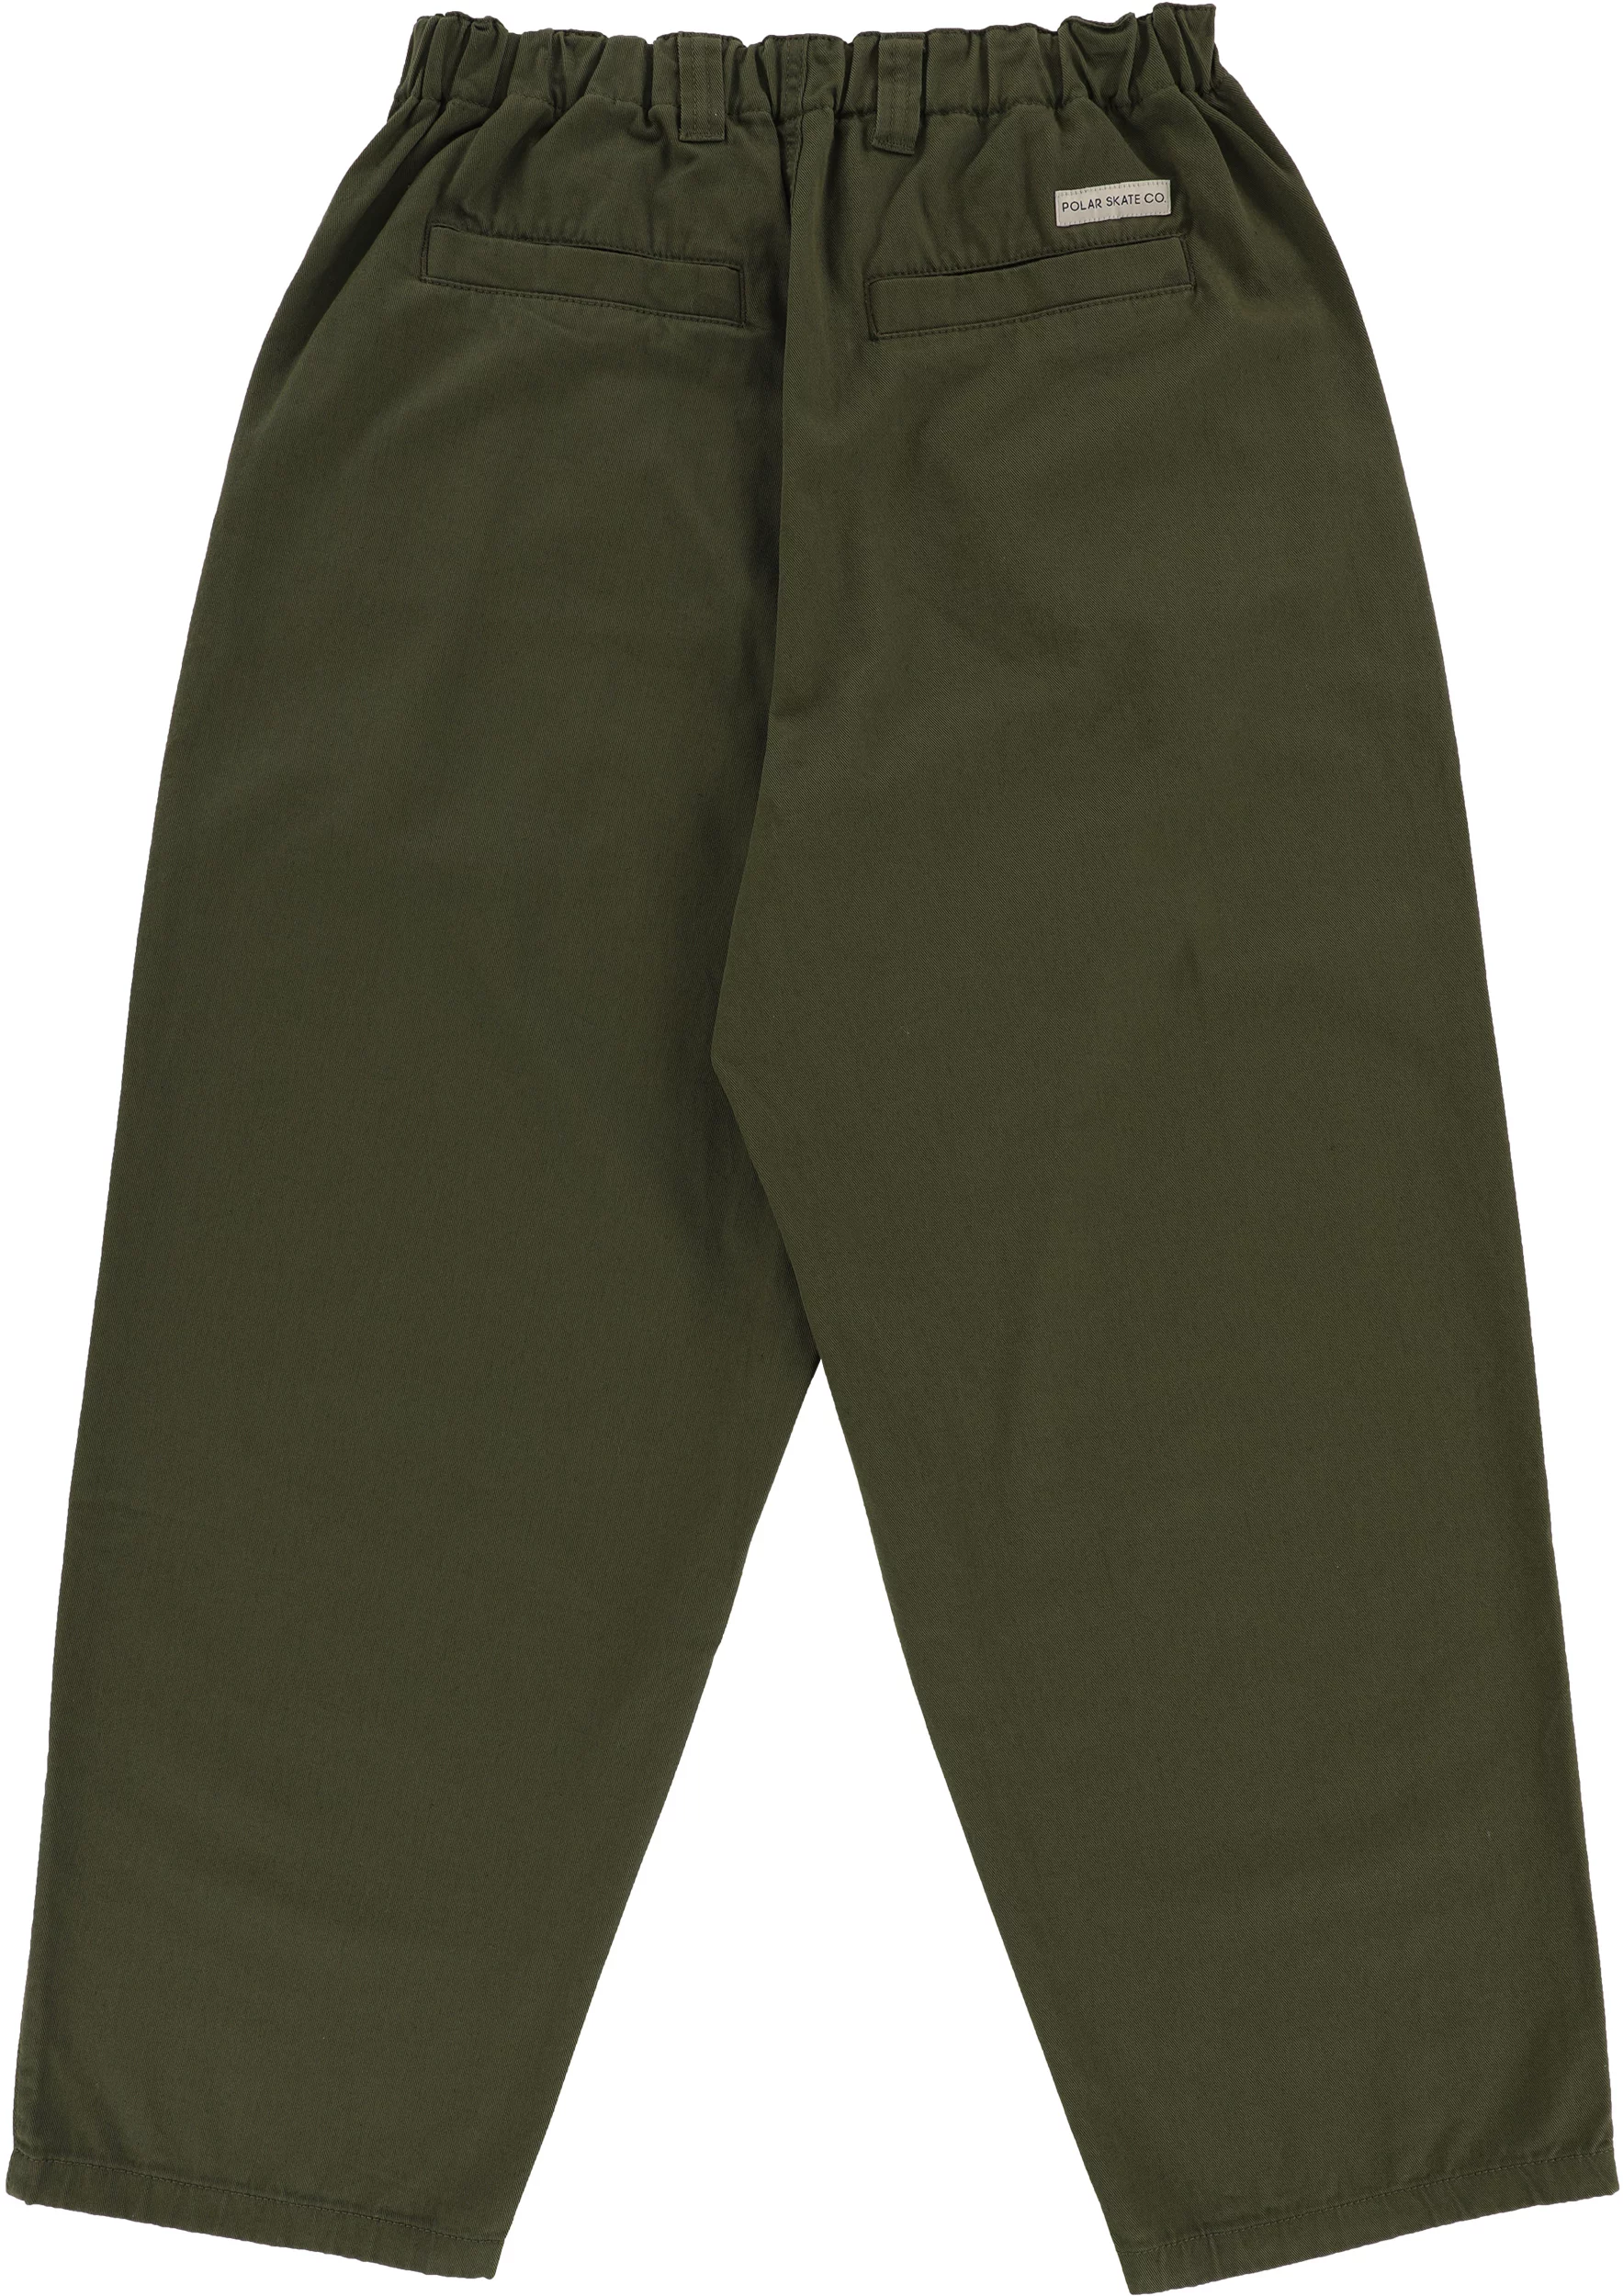 Polar Skate Co. Railway Chino Pants - uniform green | Tactics